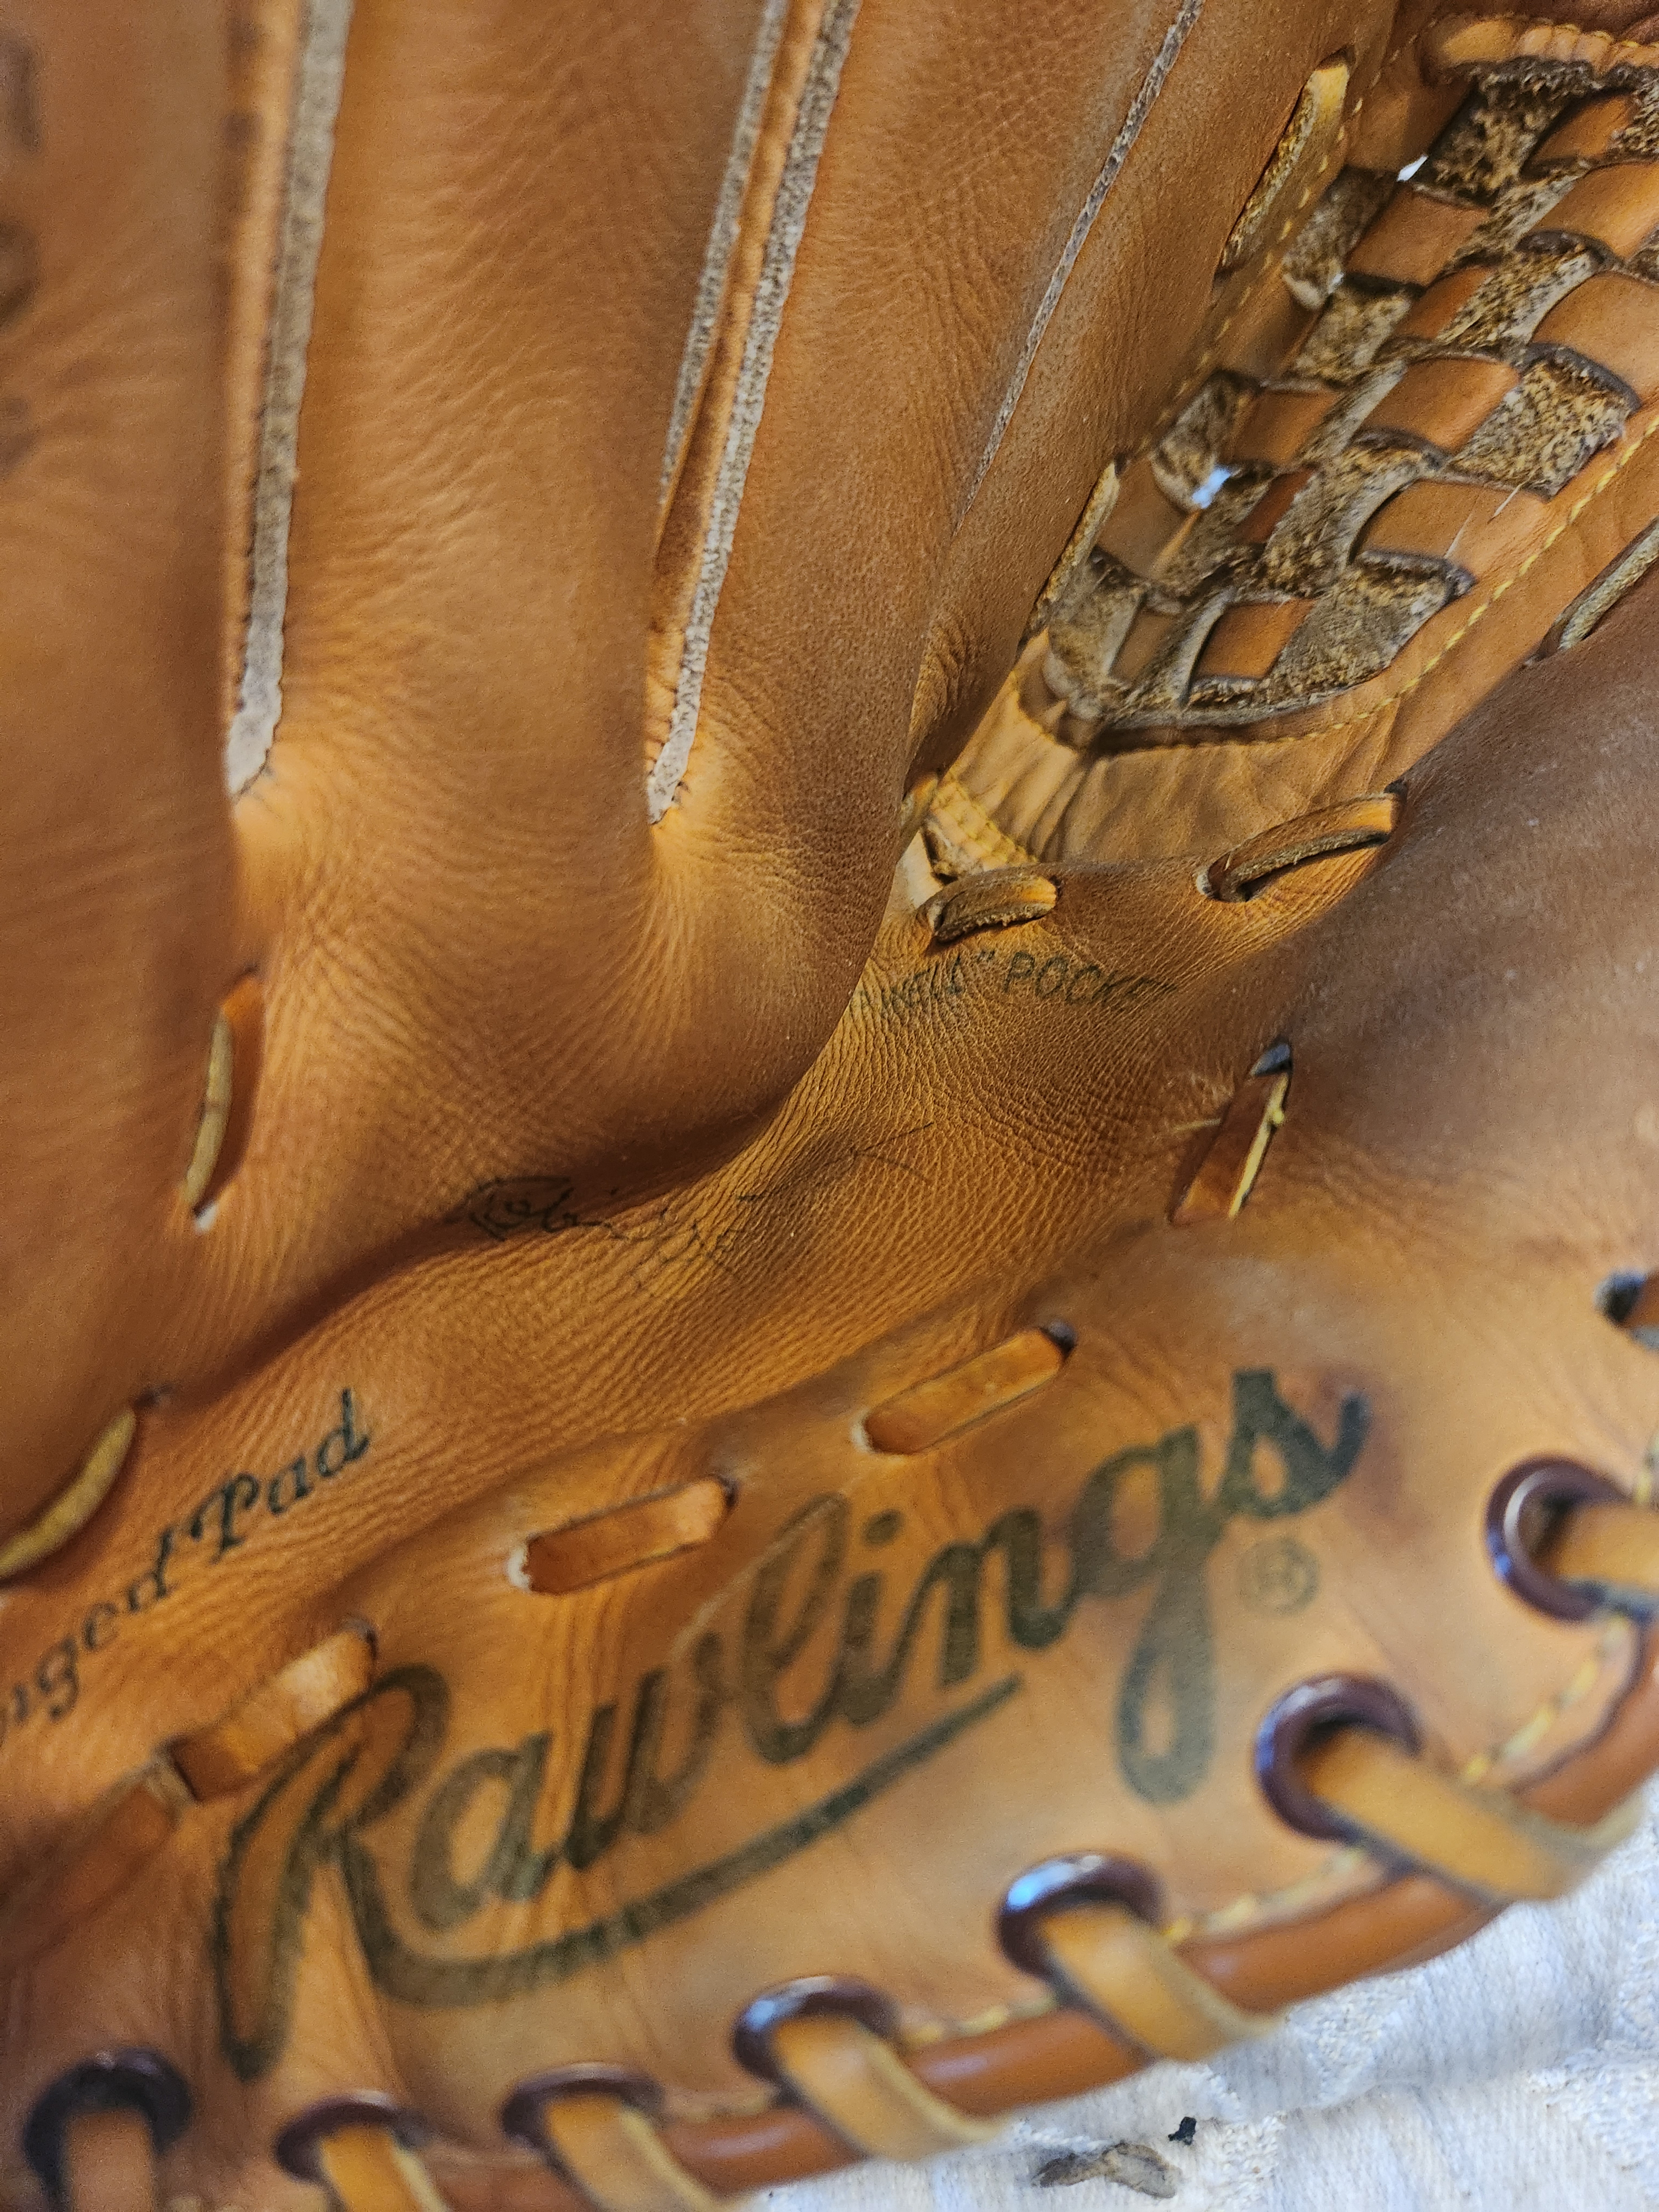 Supreme Rawlings Baseball Mitt – On The Arm